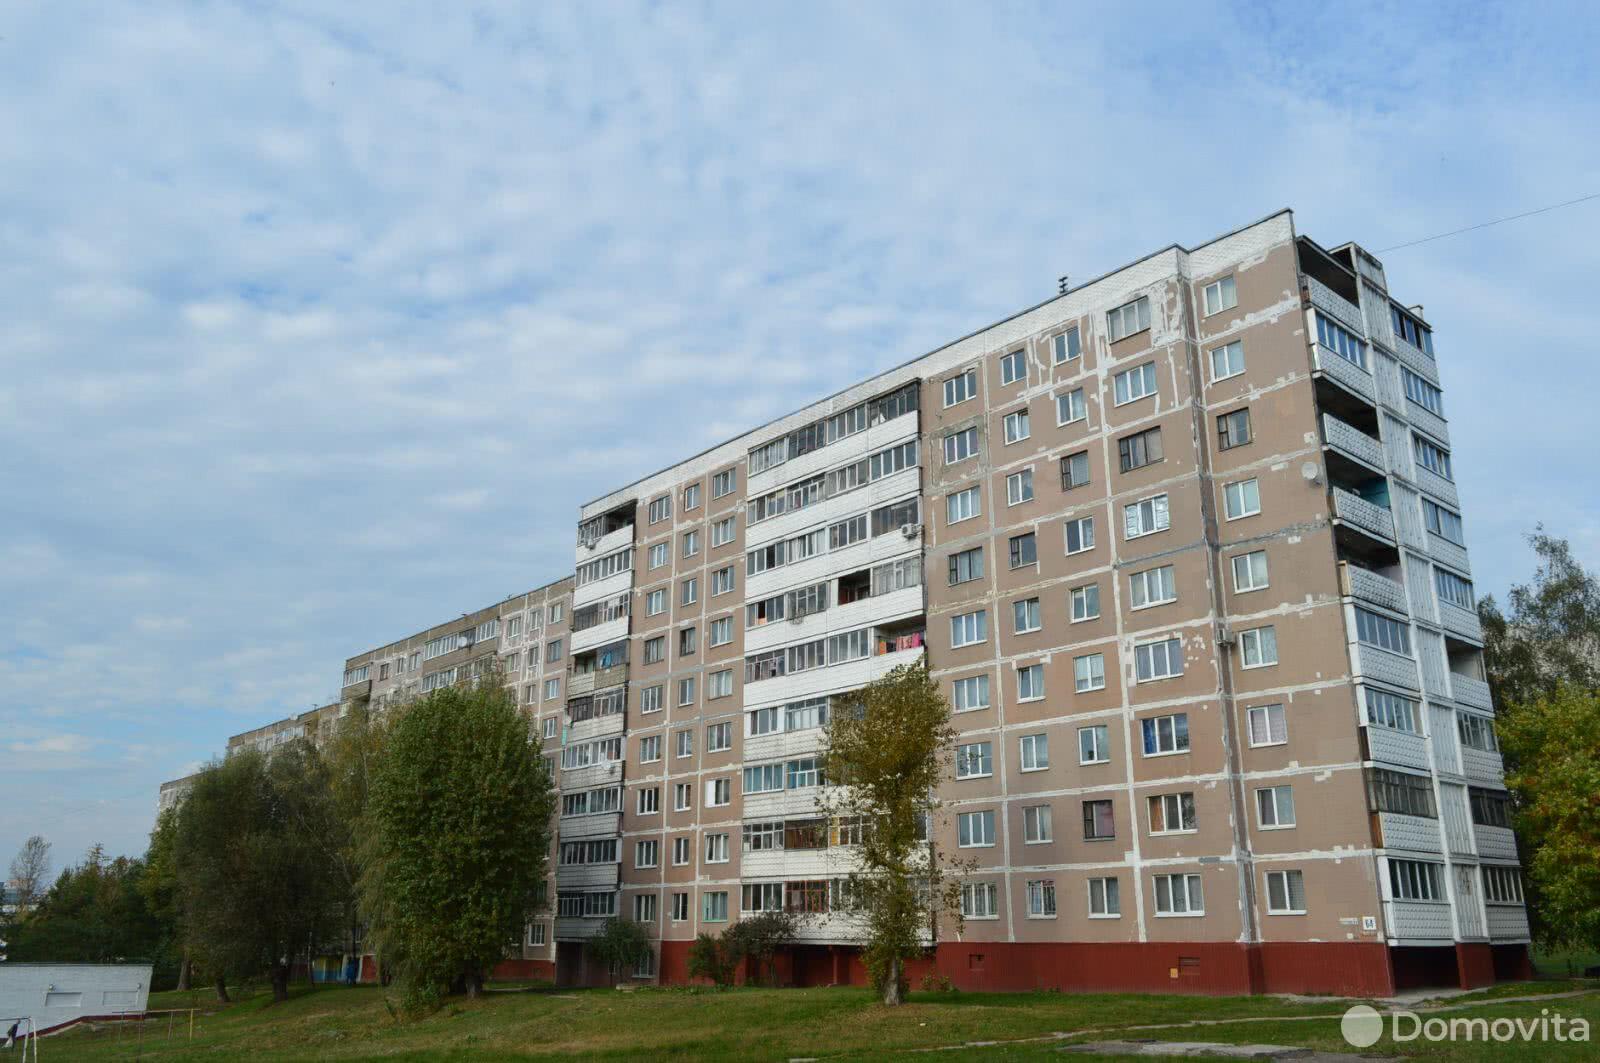 квартира, Могилев, пр-т Димитрова, д. 64, стоимость продажи 82 883 р.